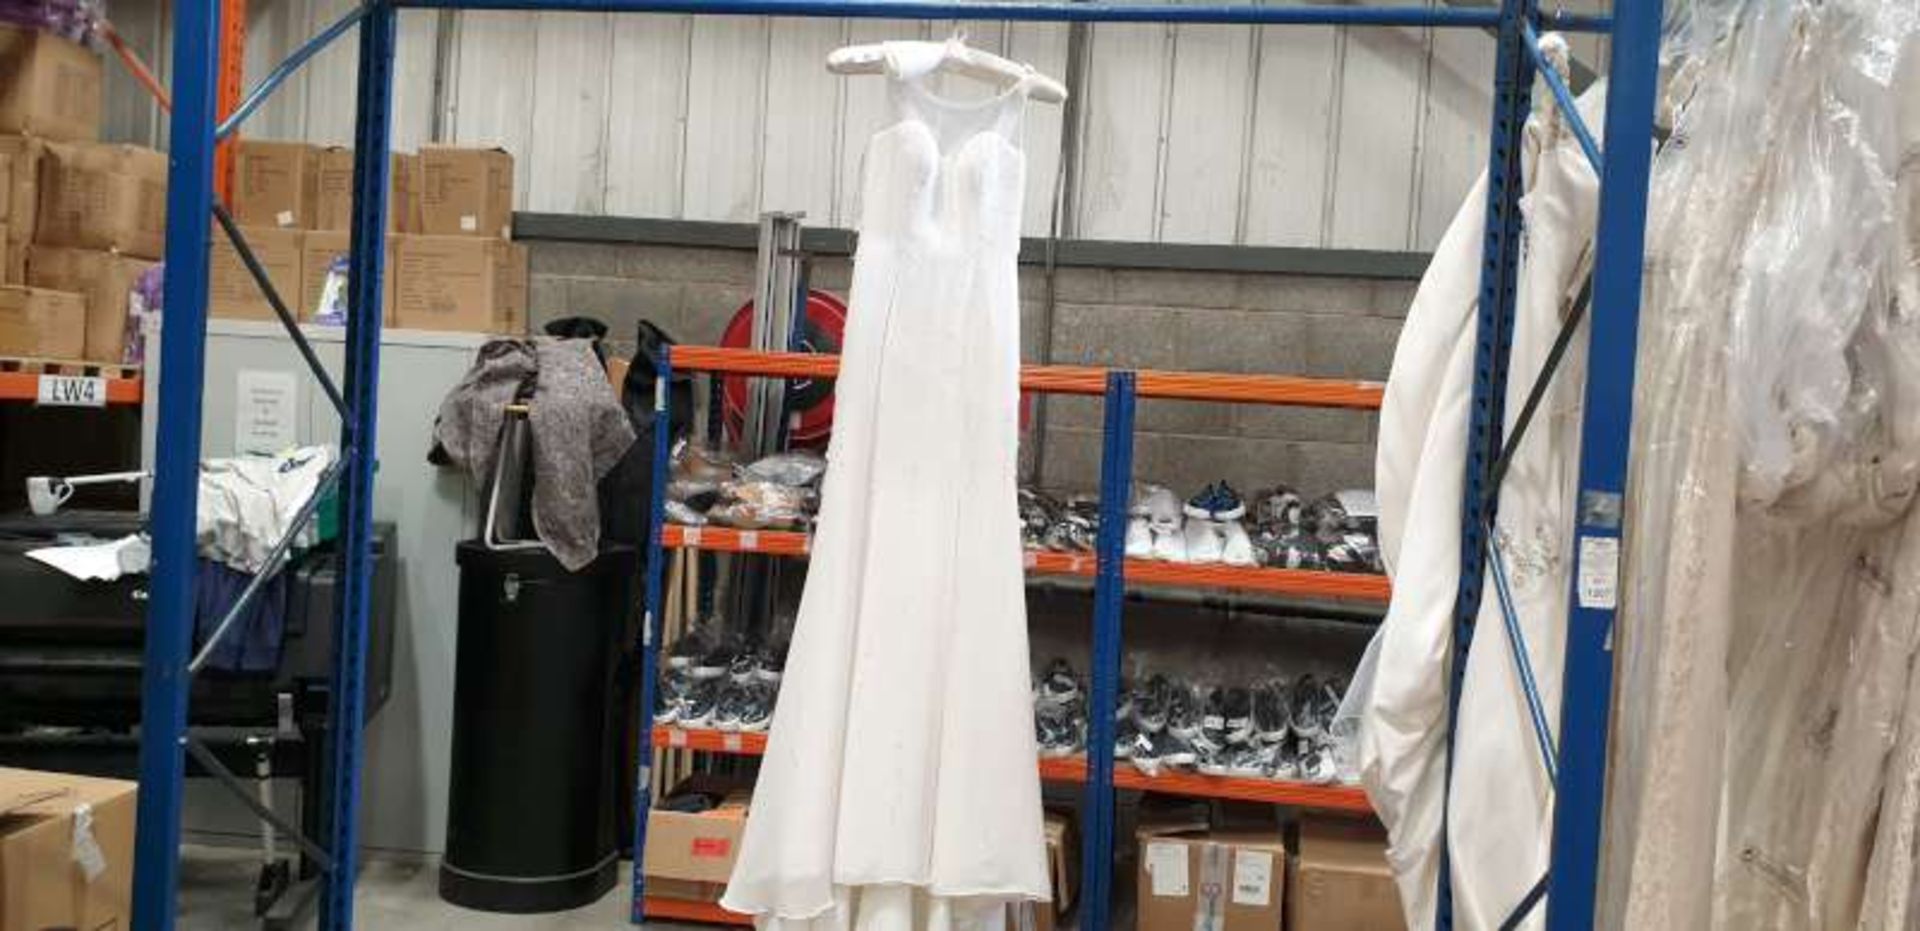 DIANE HARBRIDGE SIZE 8 OFF WHITE HIGH NECK WEDDING DRESS